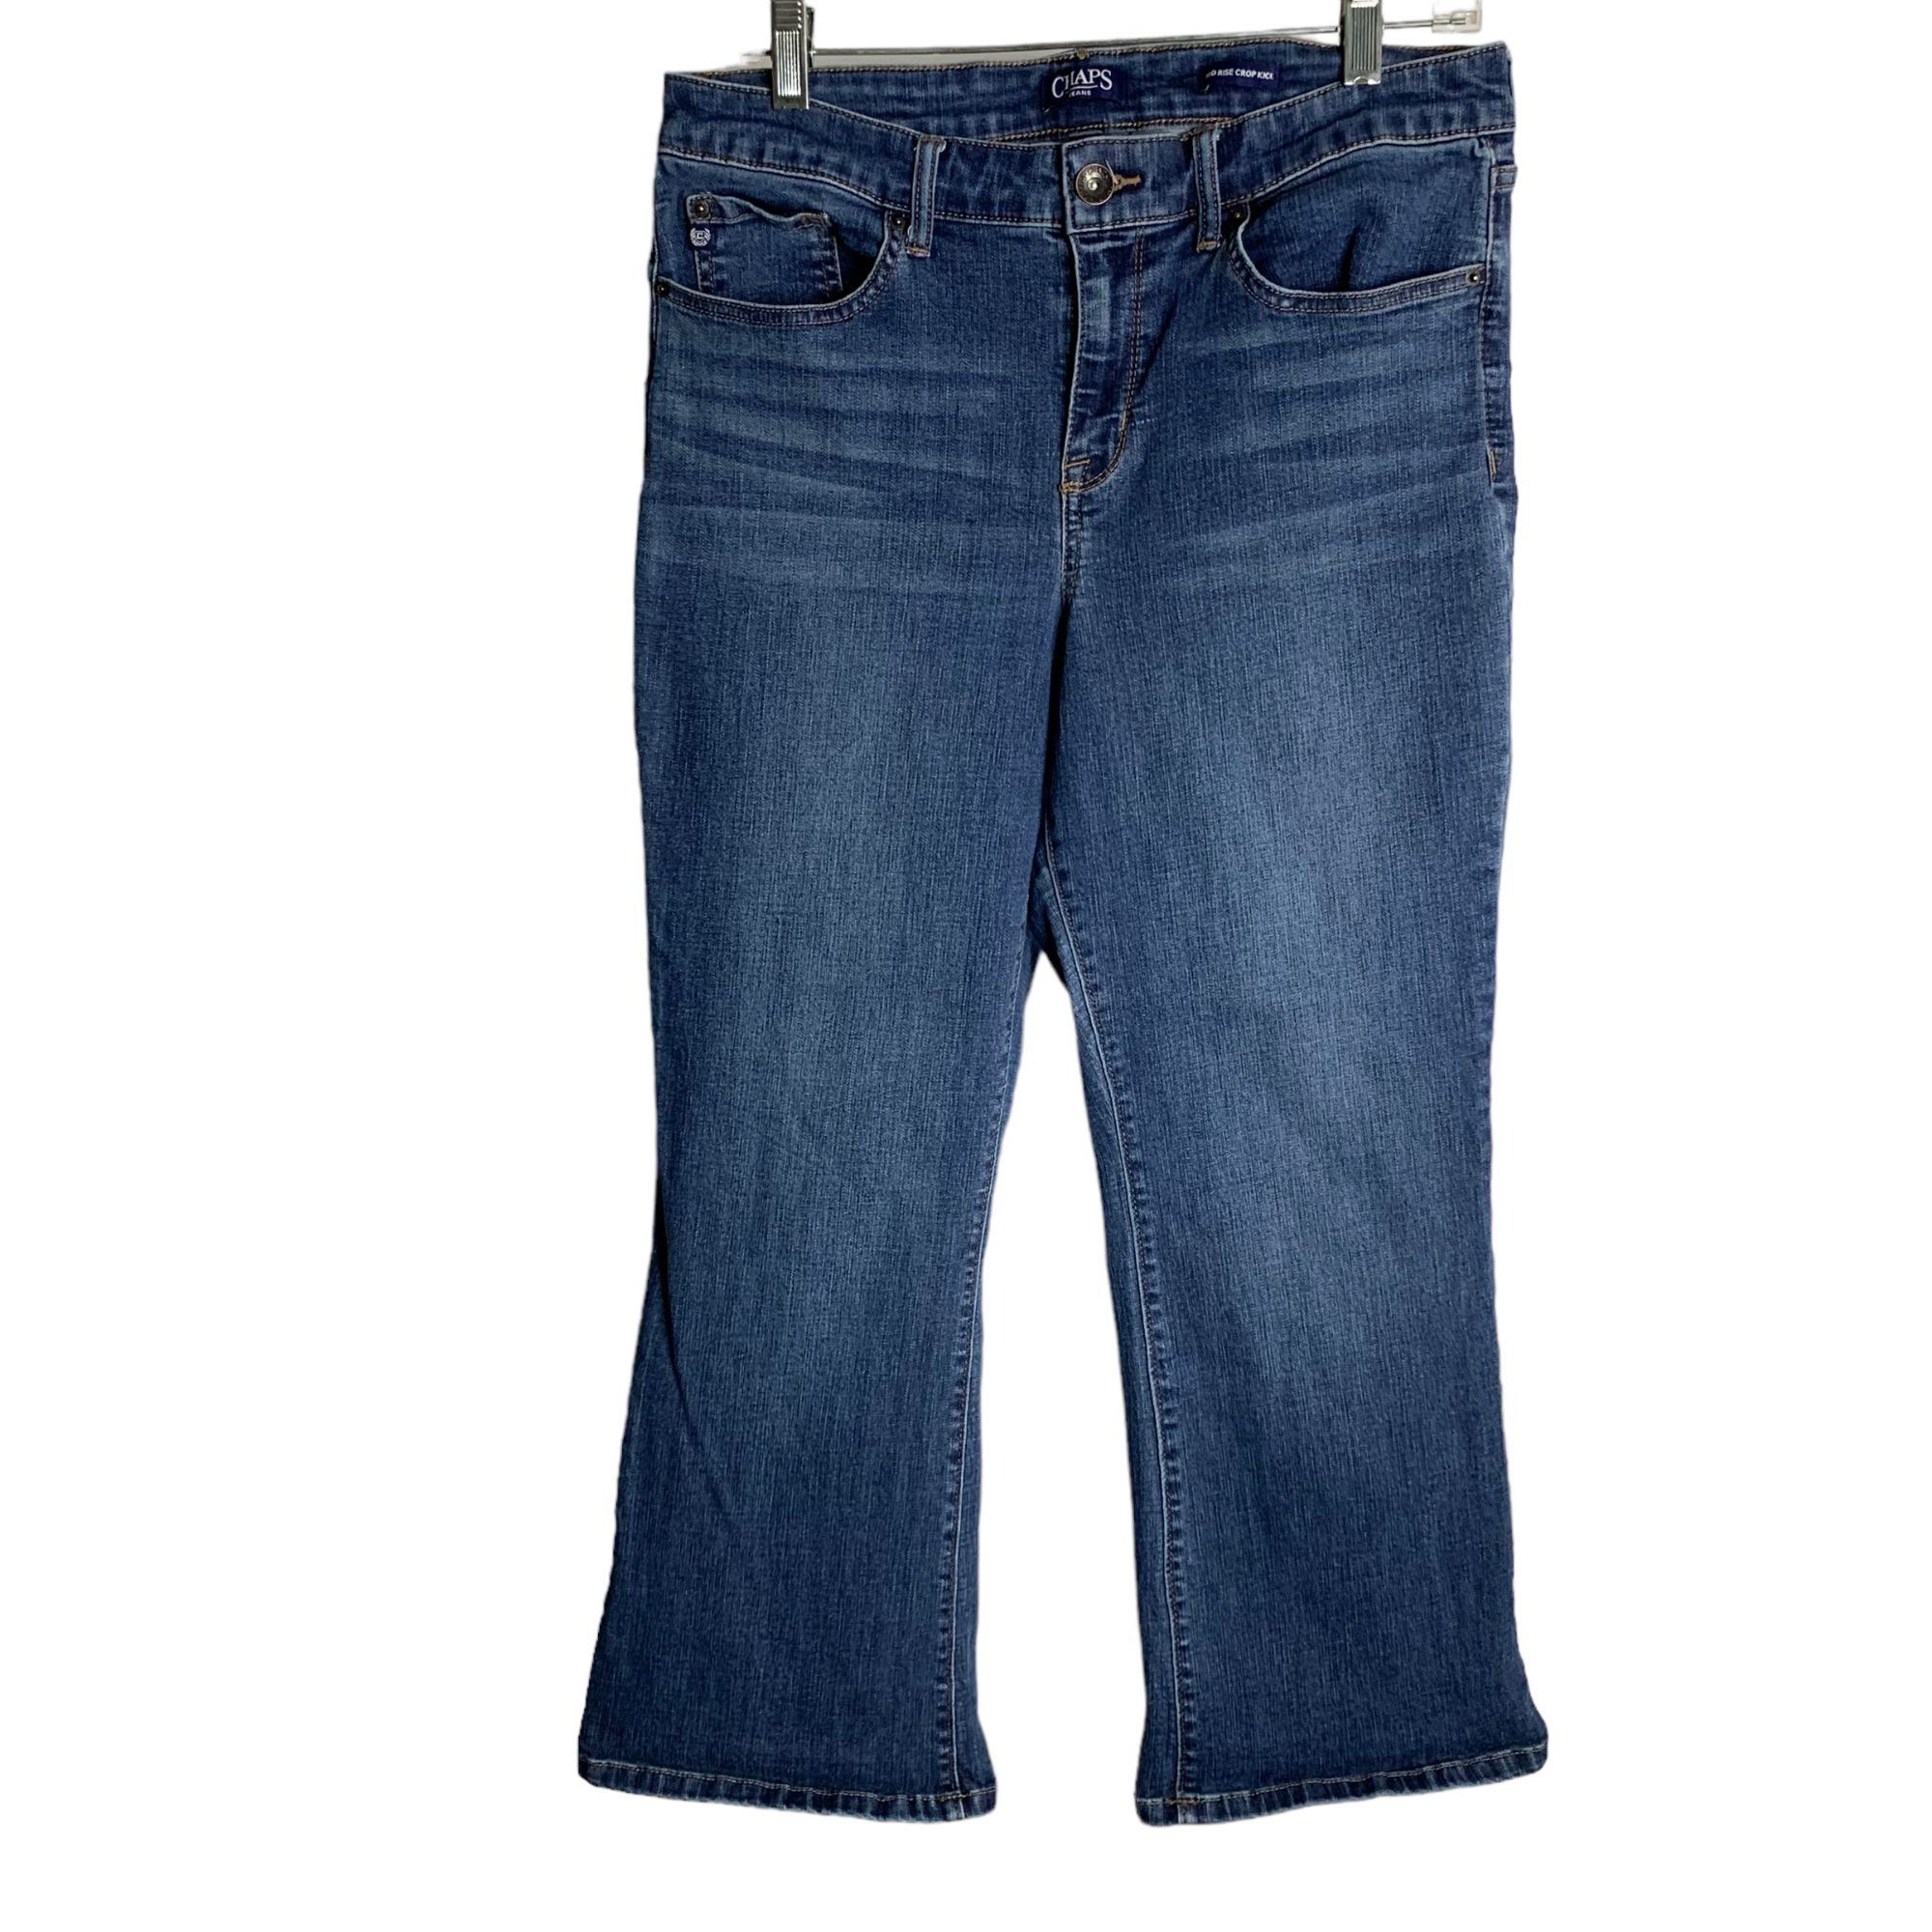 Chaps Chaps Mid Rise Crop Kick Denim Jeans 12 Med Wash Stretch Bel ...